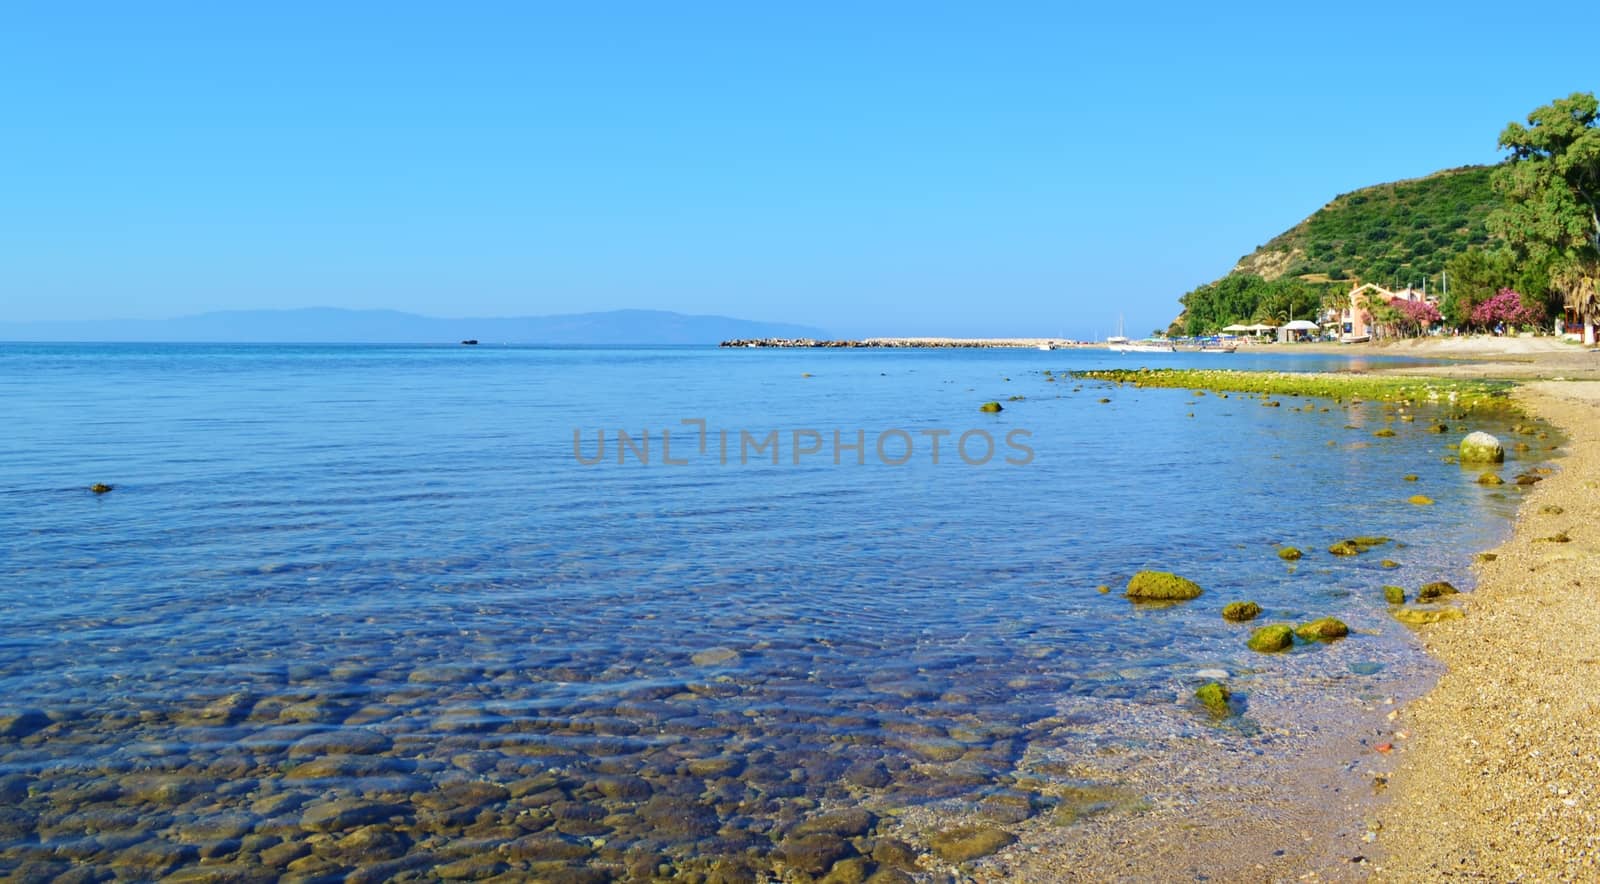 A peaceful coastal image from Katelios, on the beautiful Greek Island of Kefalonia.